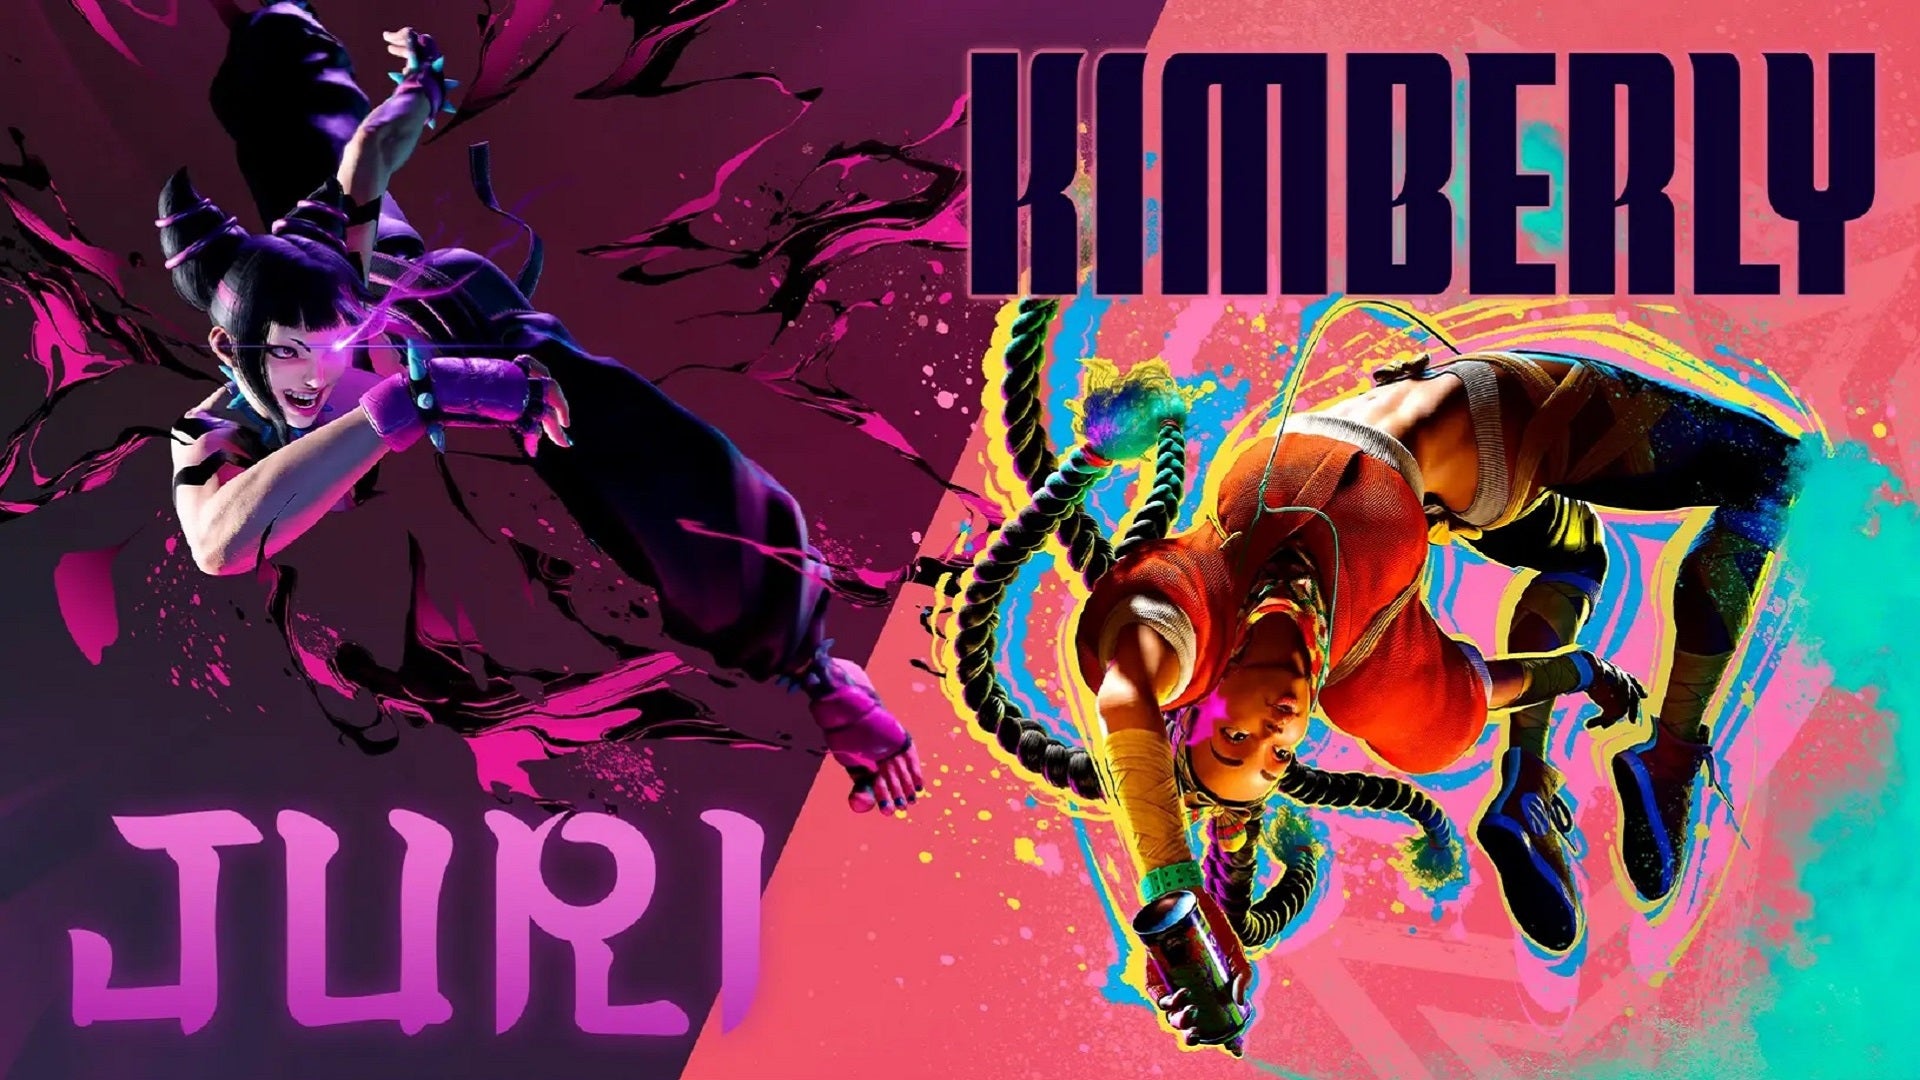 Official Kimberly x Juri art from Street Fighter 6